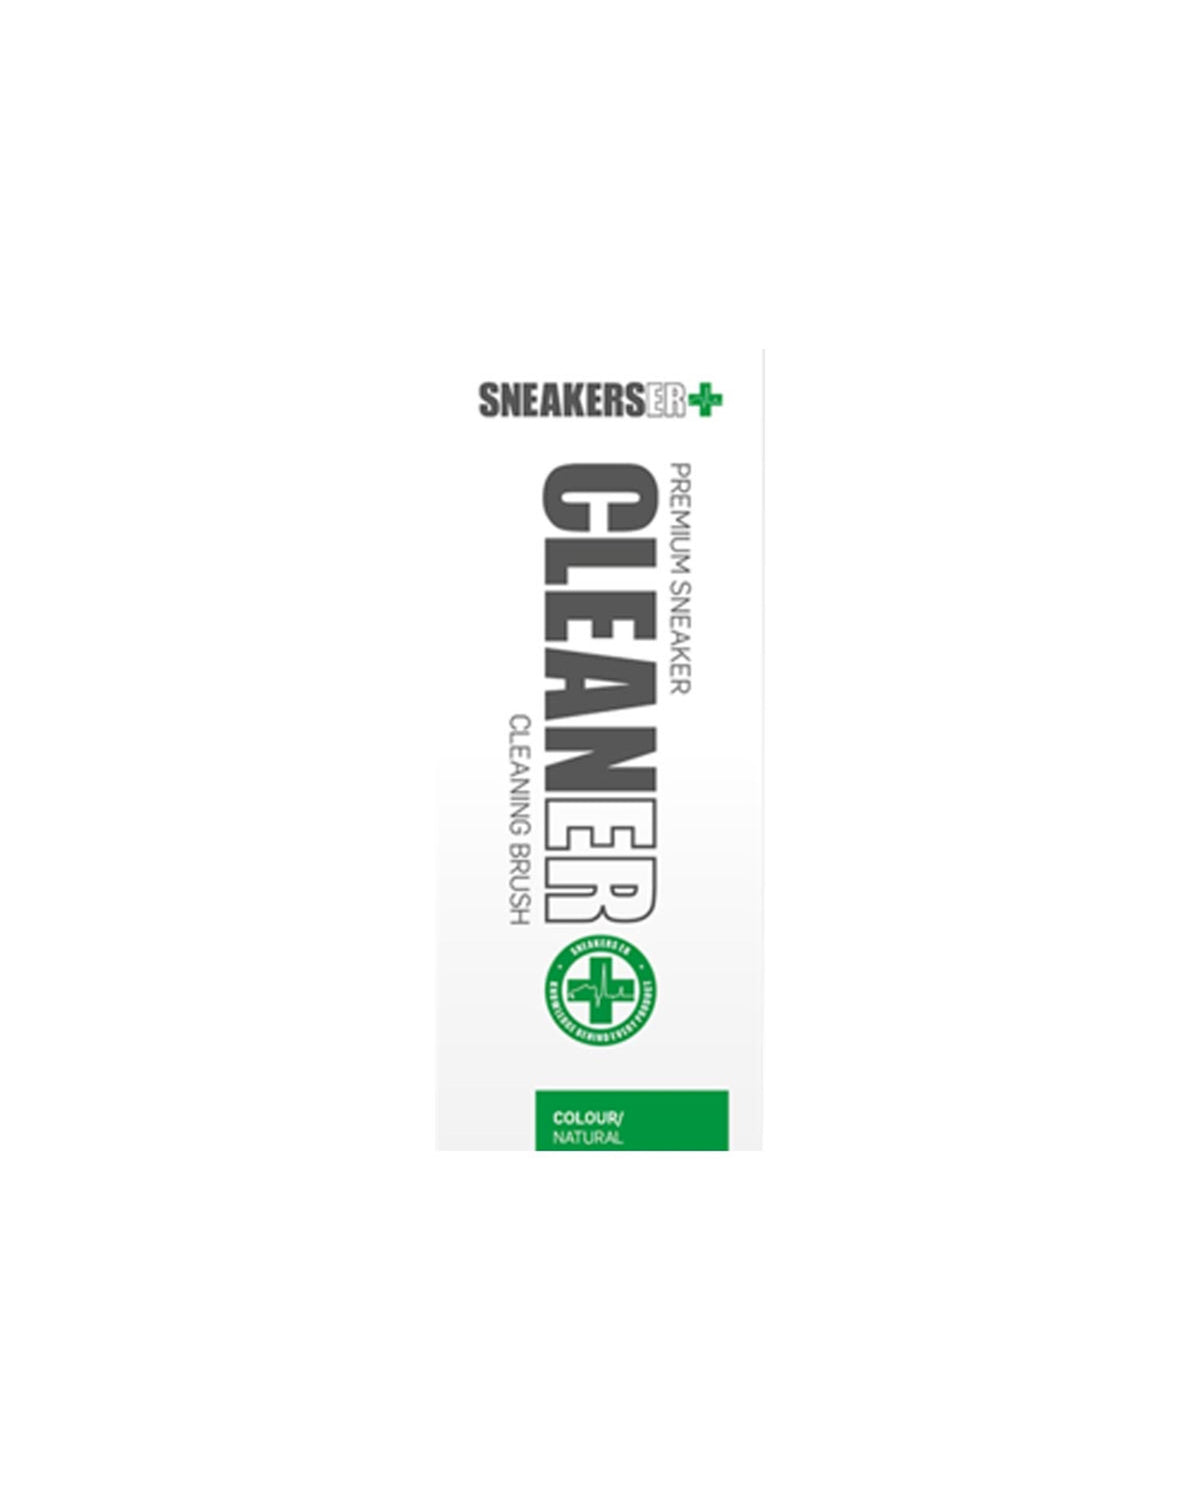 Cleaner Premium Sneaker Cleaning Brush SERCLN002